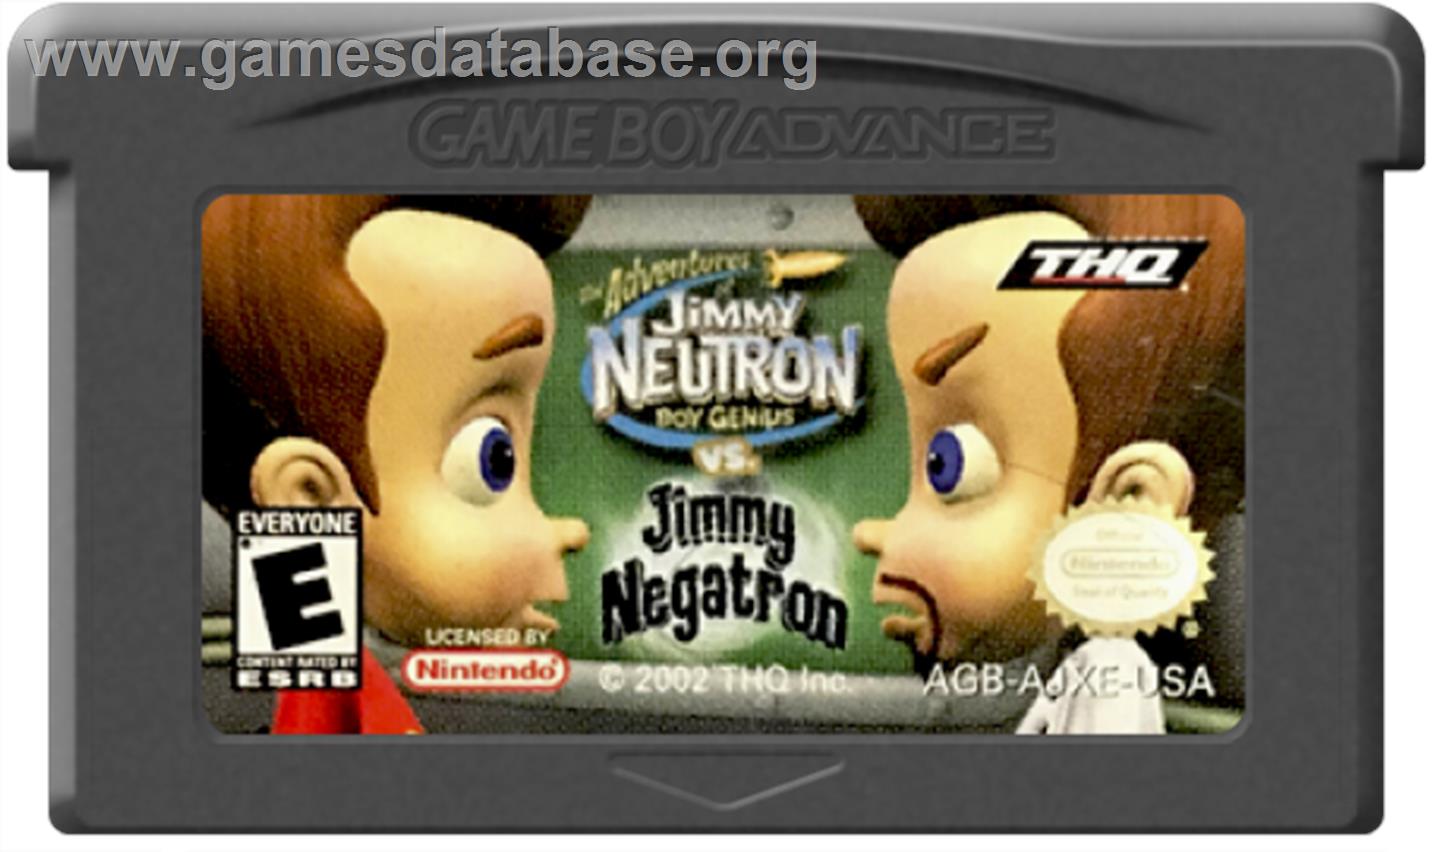 Adventures of Jimmy Neutron: Boy Genius - Jimmy Neutron Vs. Jimmy Negatron - Nintendo Game Boy Advance - Artwork - Cartridge